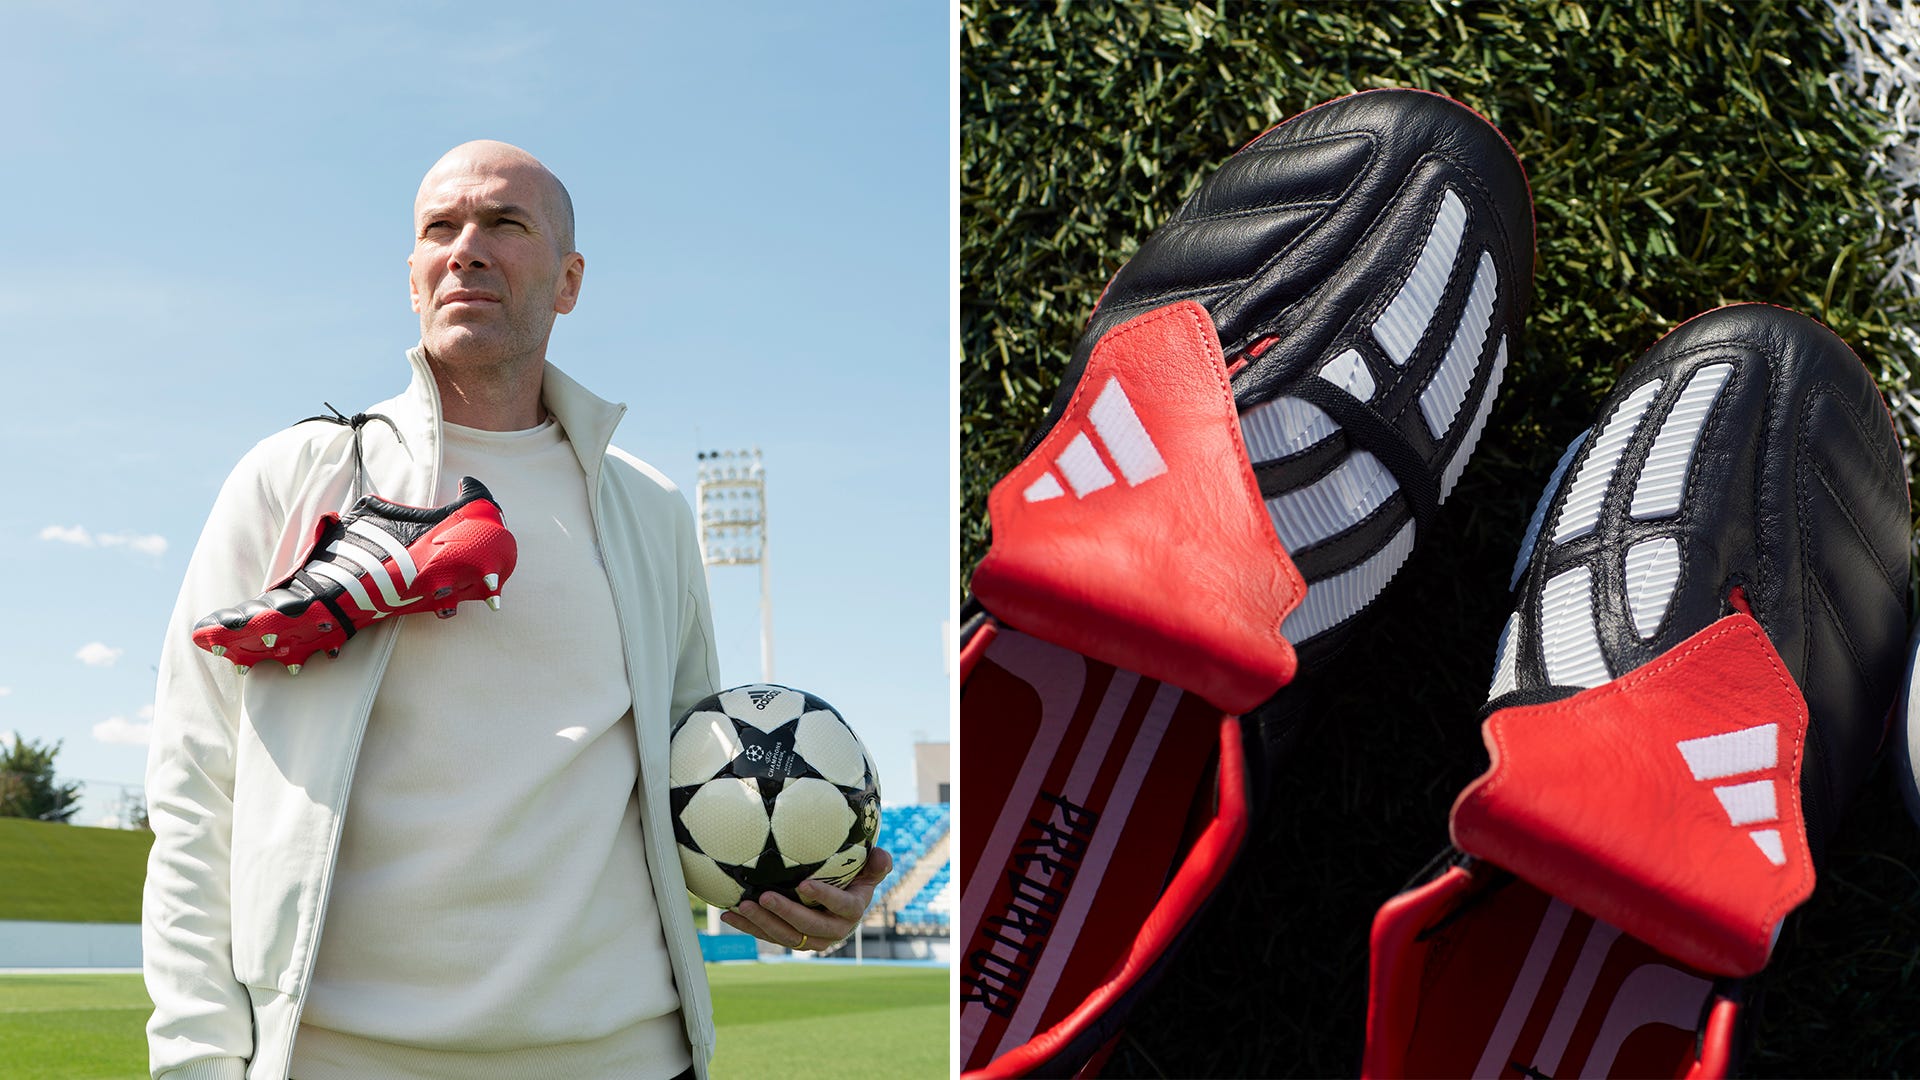 adidas 2002 Predator Boots made famous Zidane are back Goal.com Tanzania